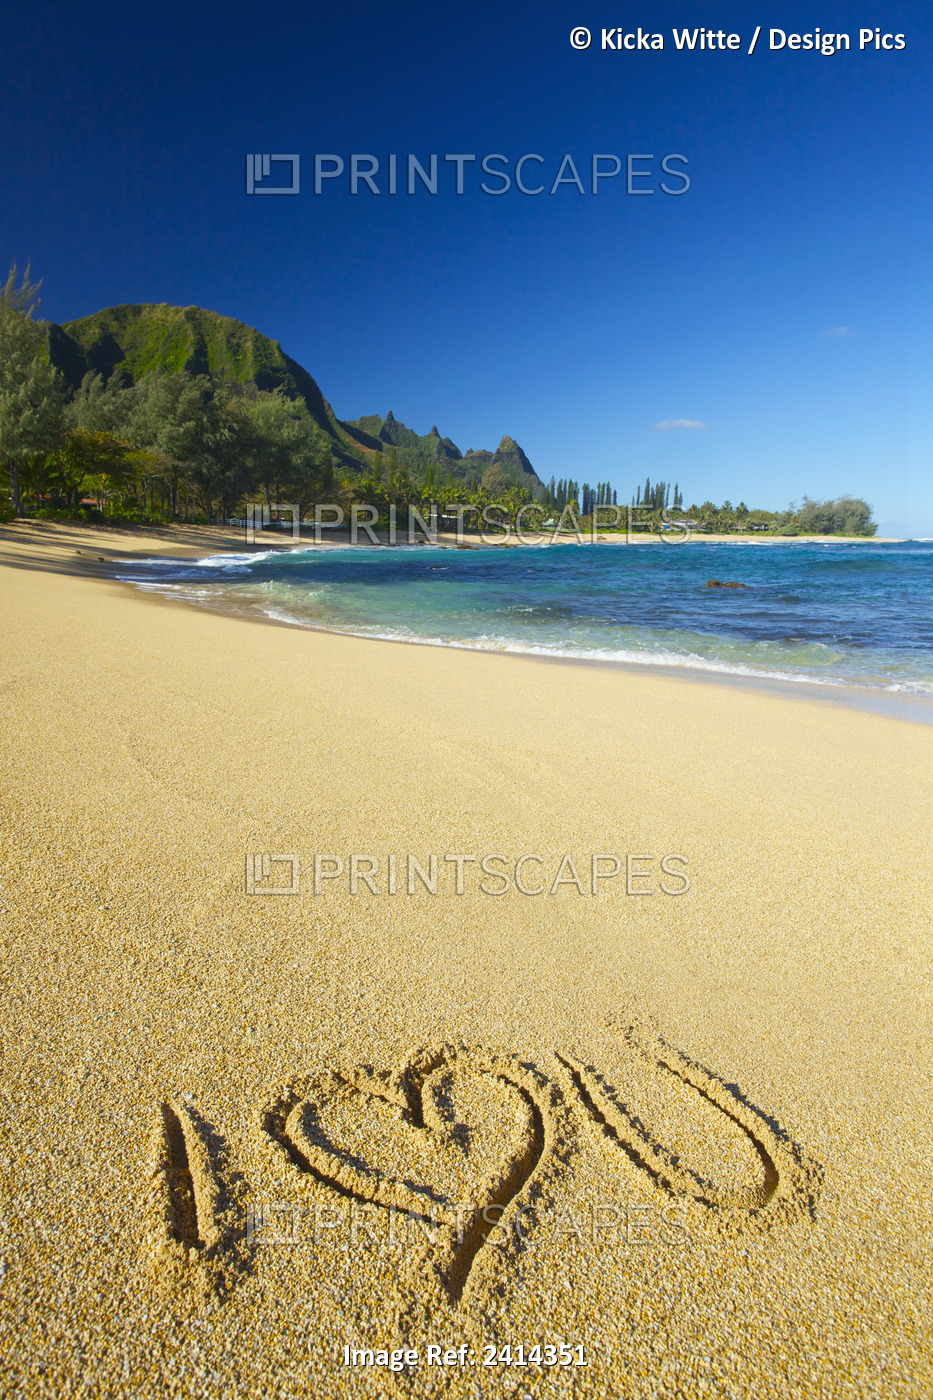 I Love You Written In The Sand On Tunnels Beach; Kauai, Hawaii, United States ...